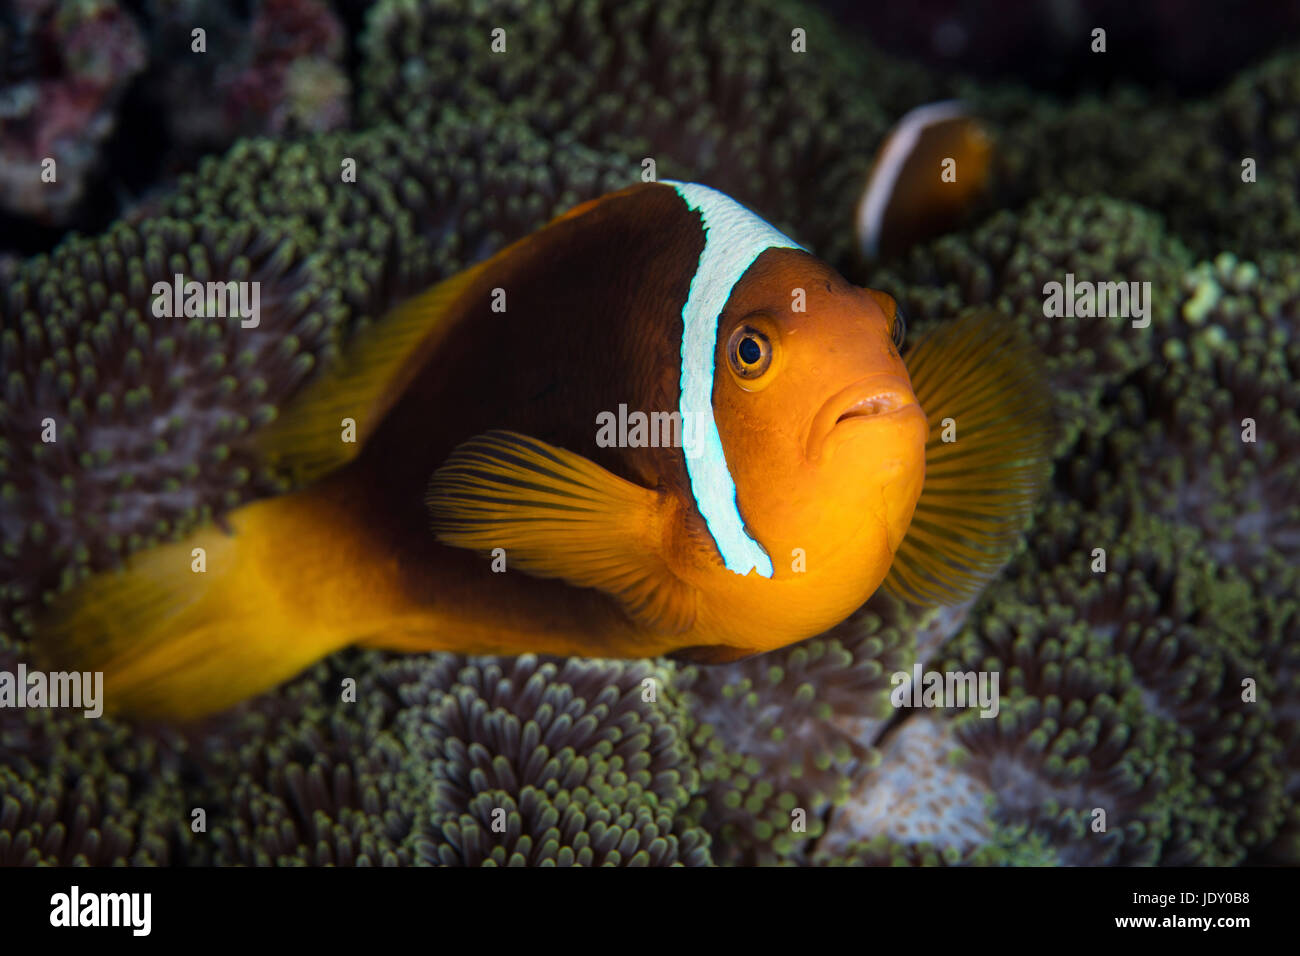 Cofano bianco, Anemonefish Amphiprion leucokranos, Melanesia, Oceano Pacifico Isole Salomone Foto Stock